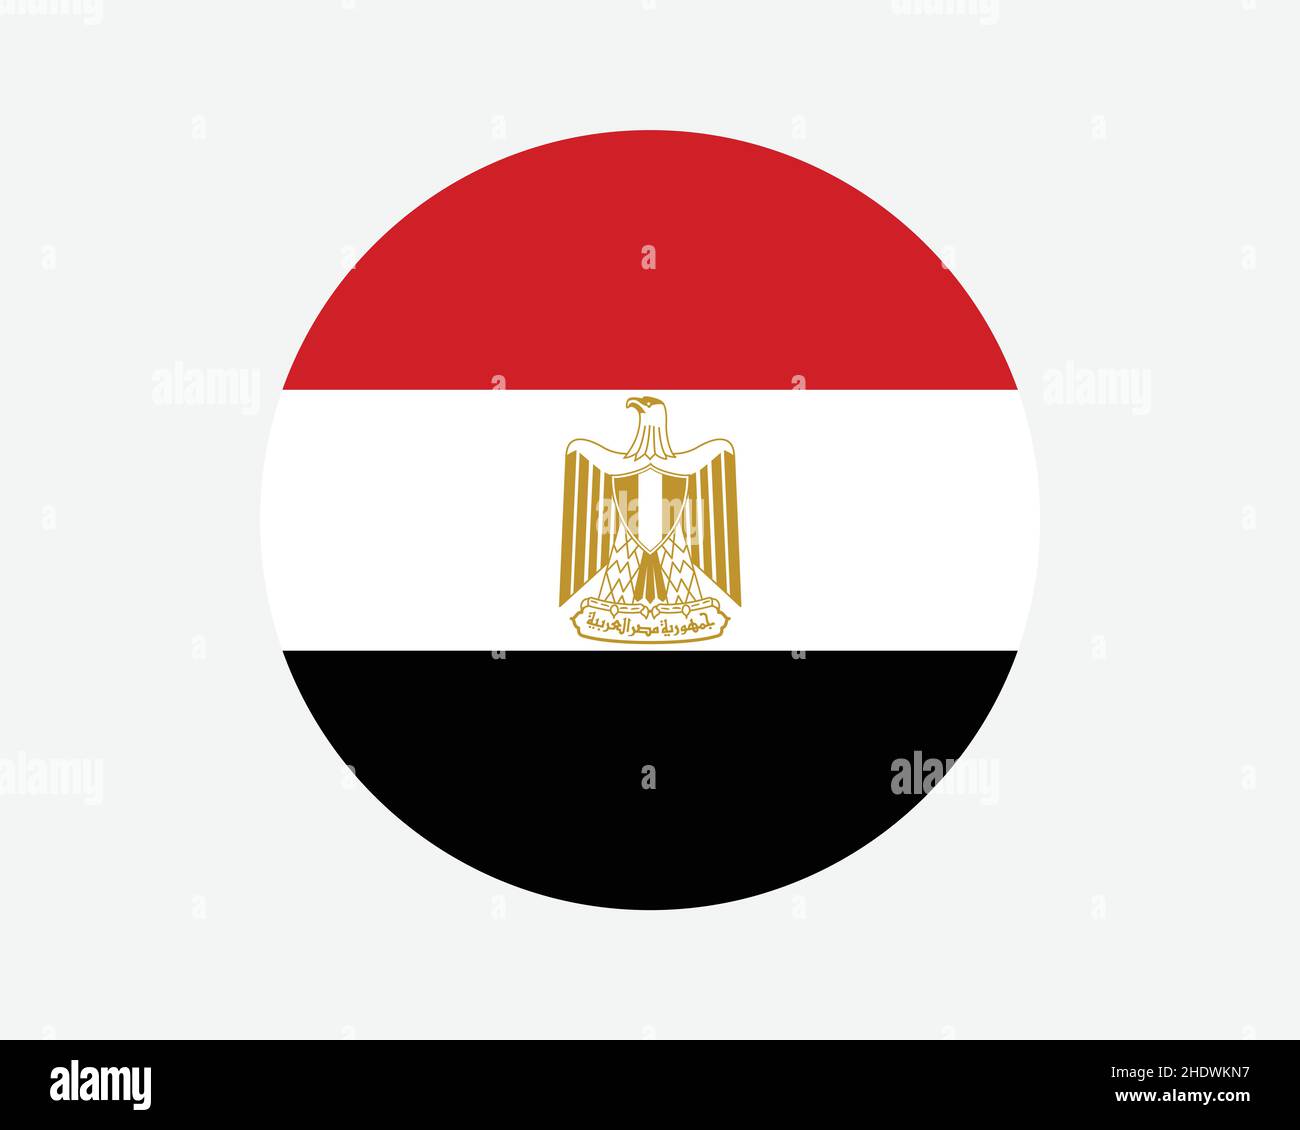 Egypt Round Country Flag. Circular Egyptian National Flag. Arab Republic of Egypt Circle Shape Button Banner. EPS Vector Illustration. Stock Vector